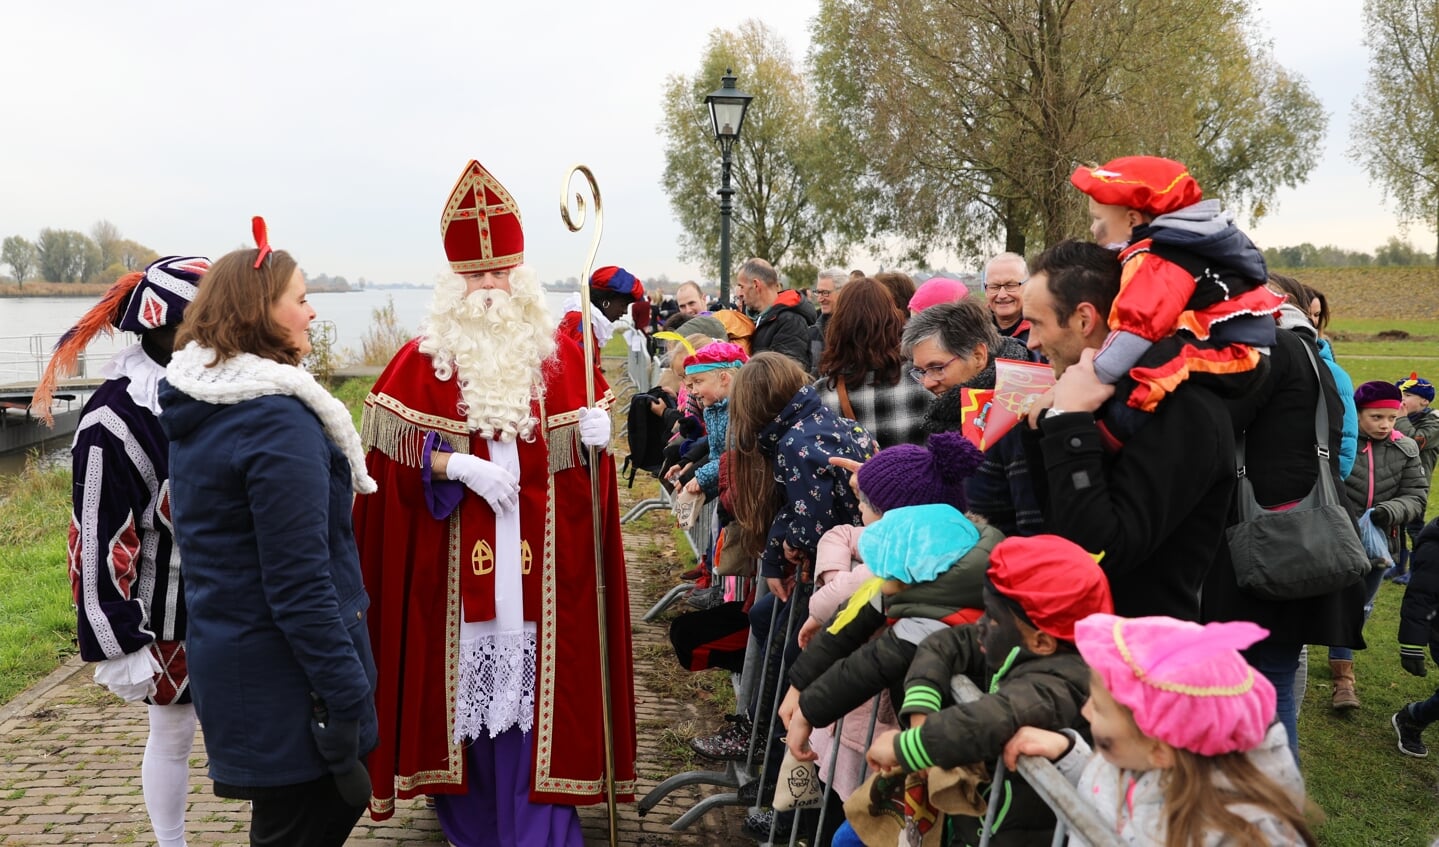 • Aankomst Sinterklaas in Nieuwpoort.